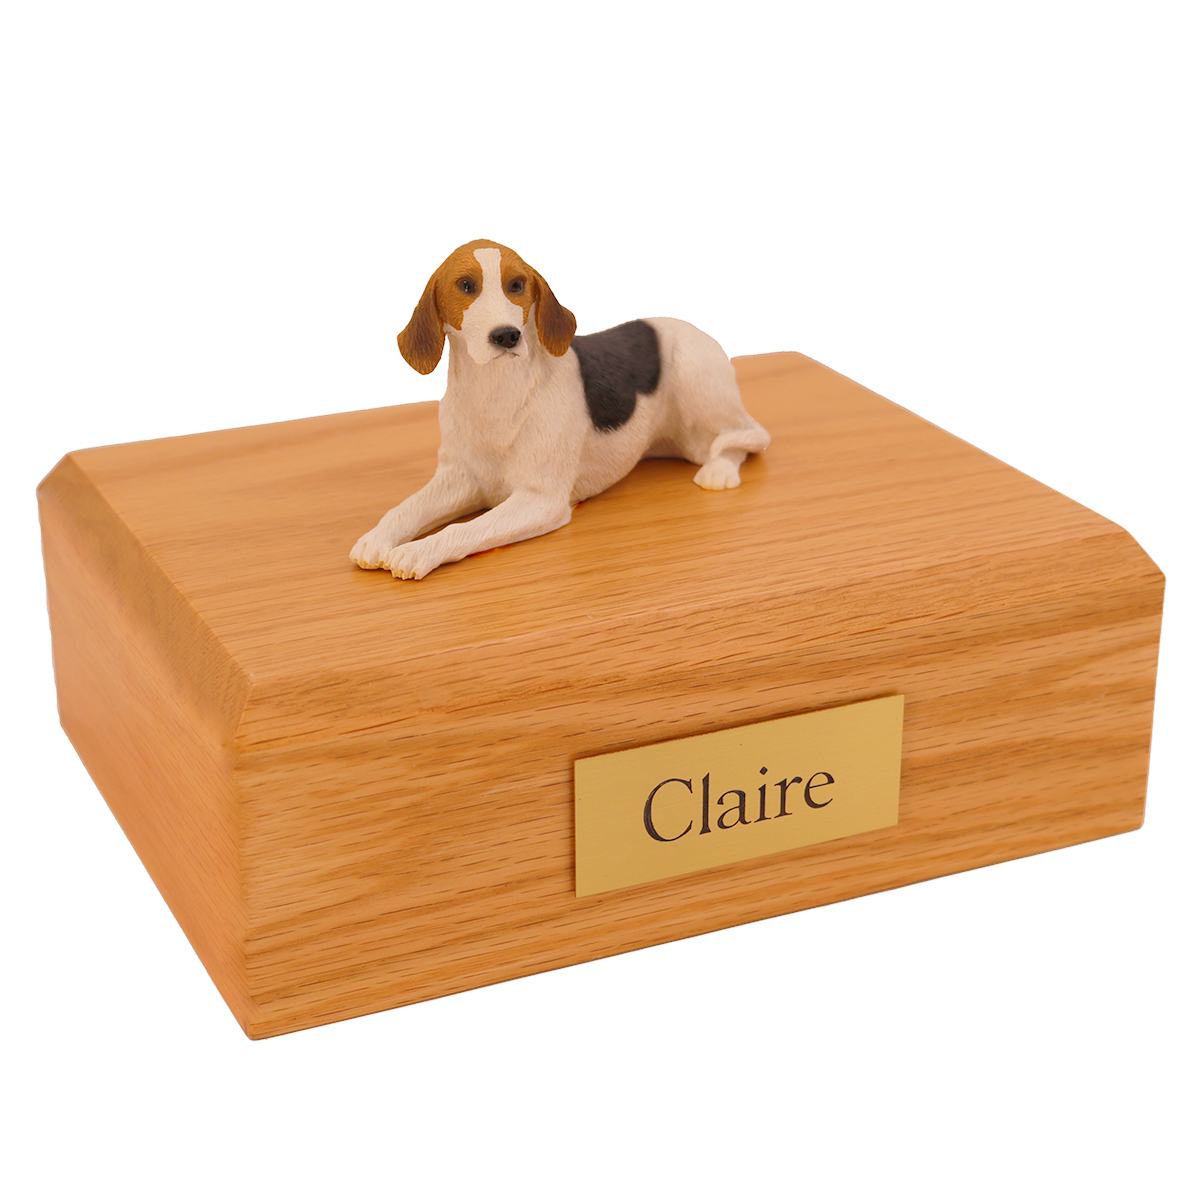 Dog, American Foxhound - Figurine Urn